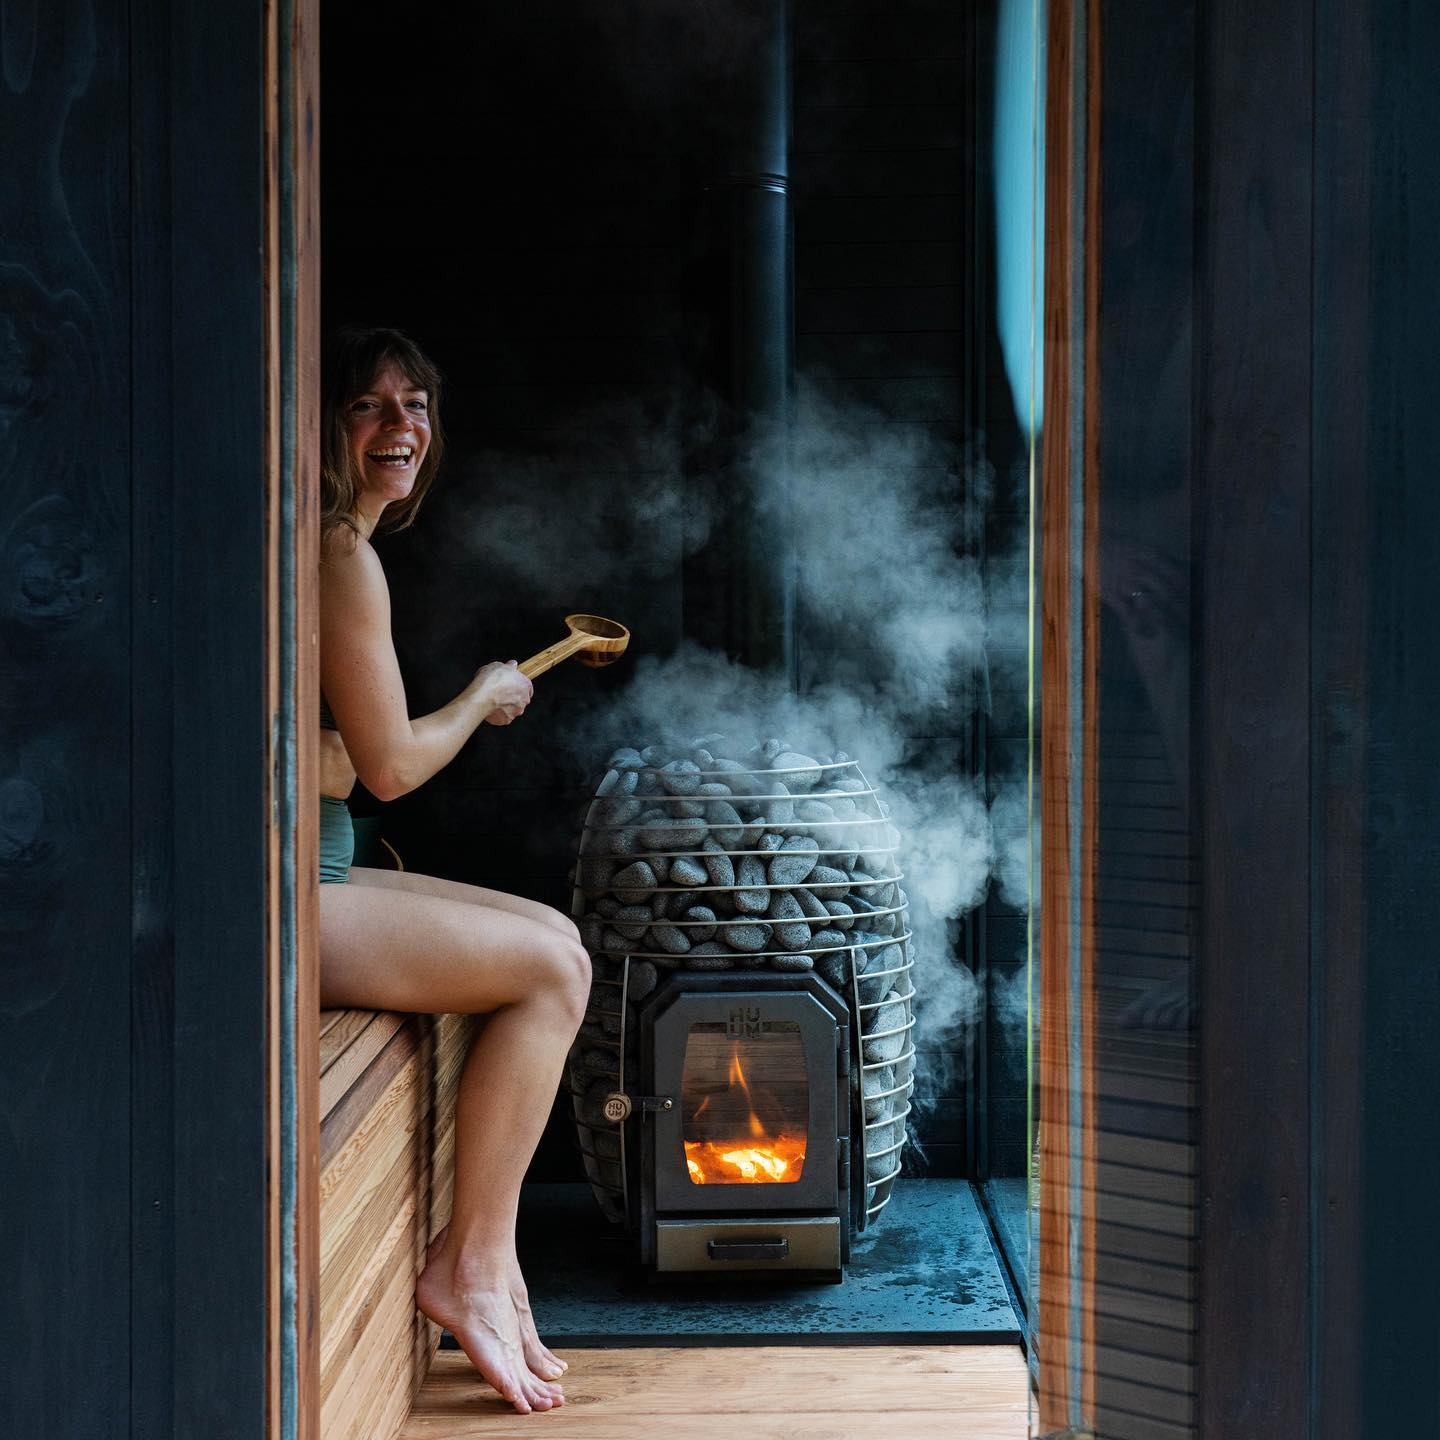 HUUM Thru-Wall Sauna Wood Stove Chimney Kit